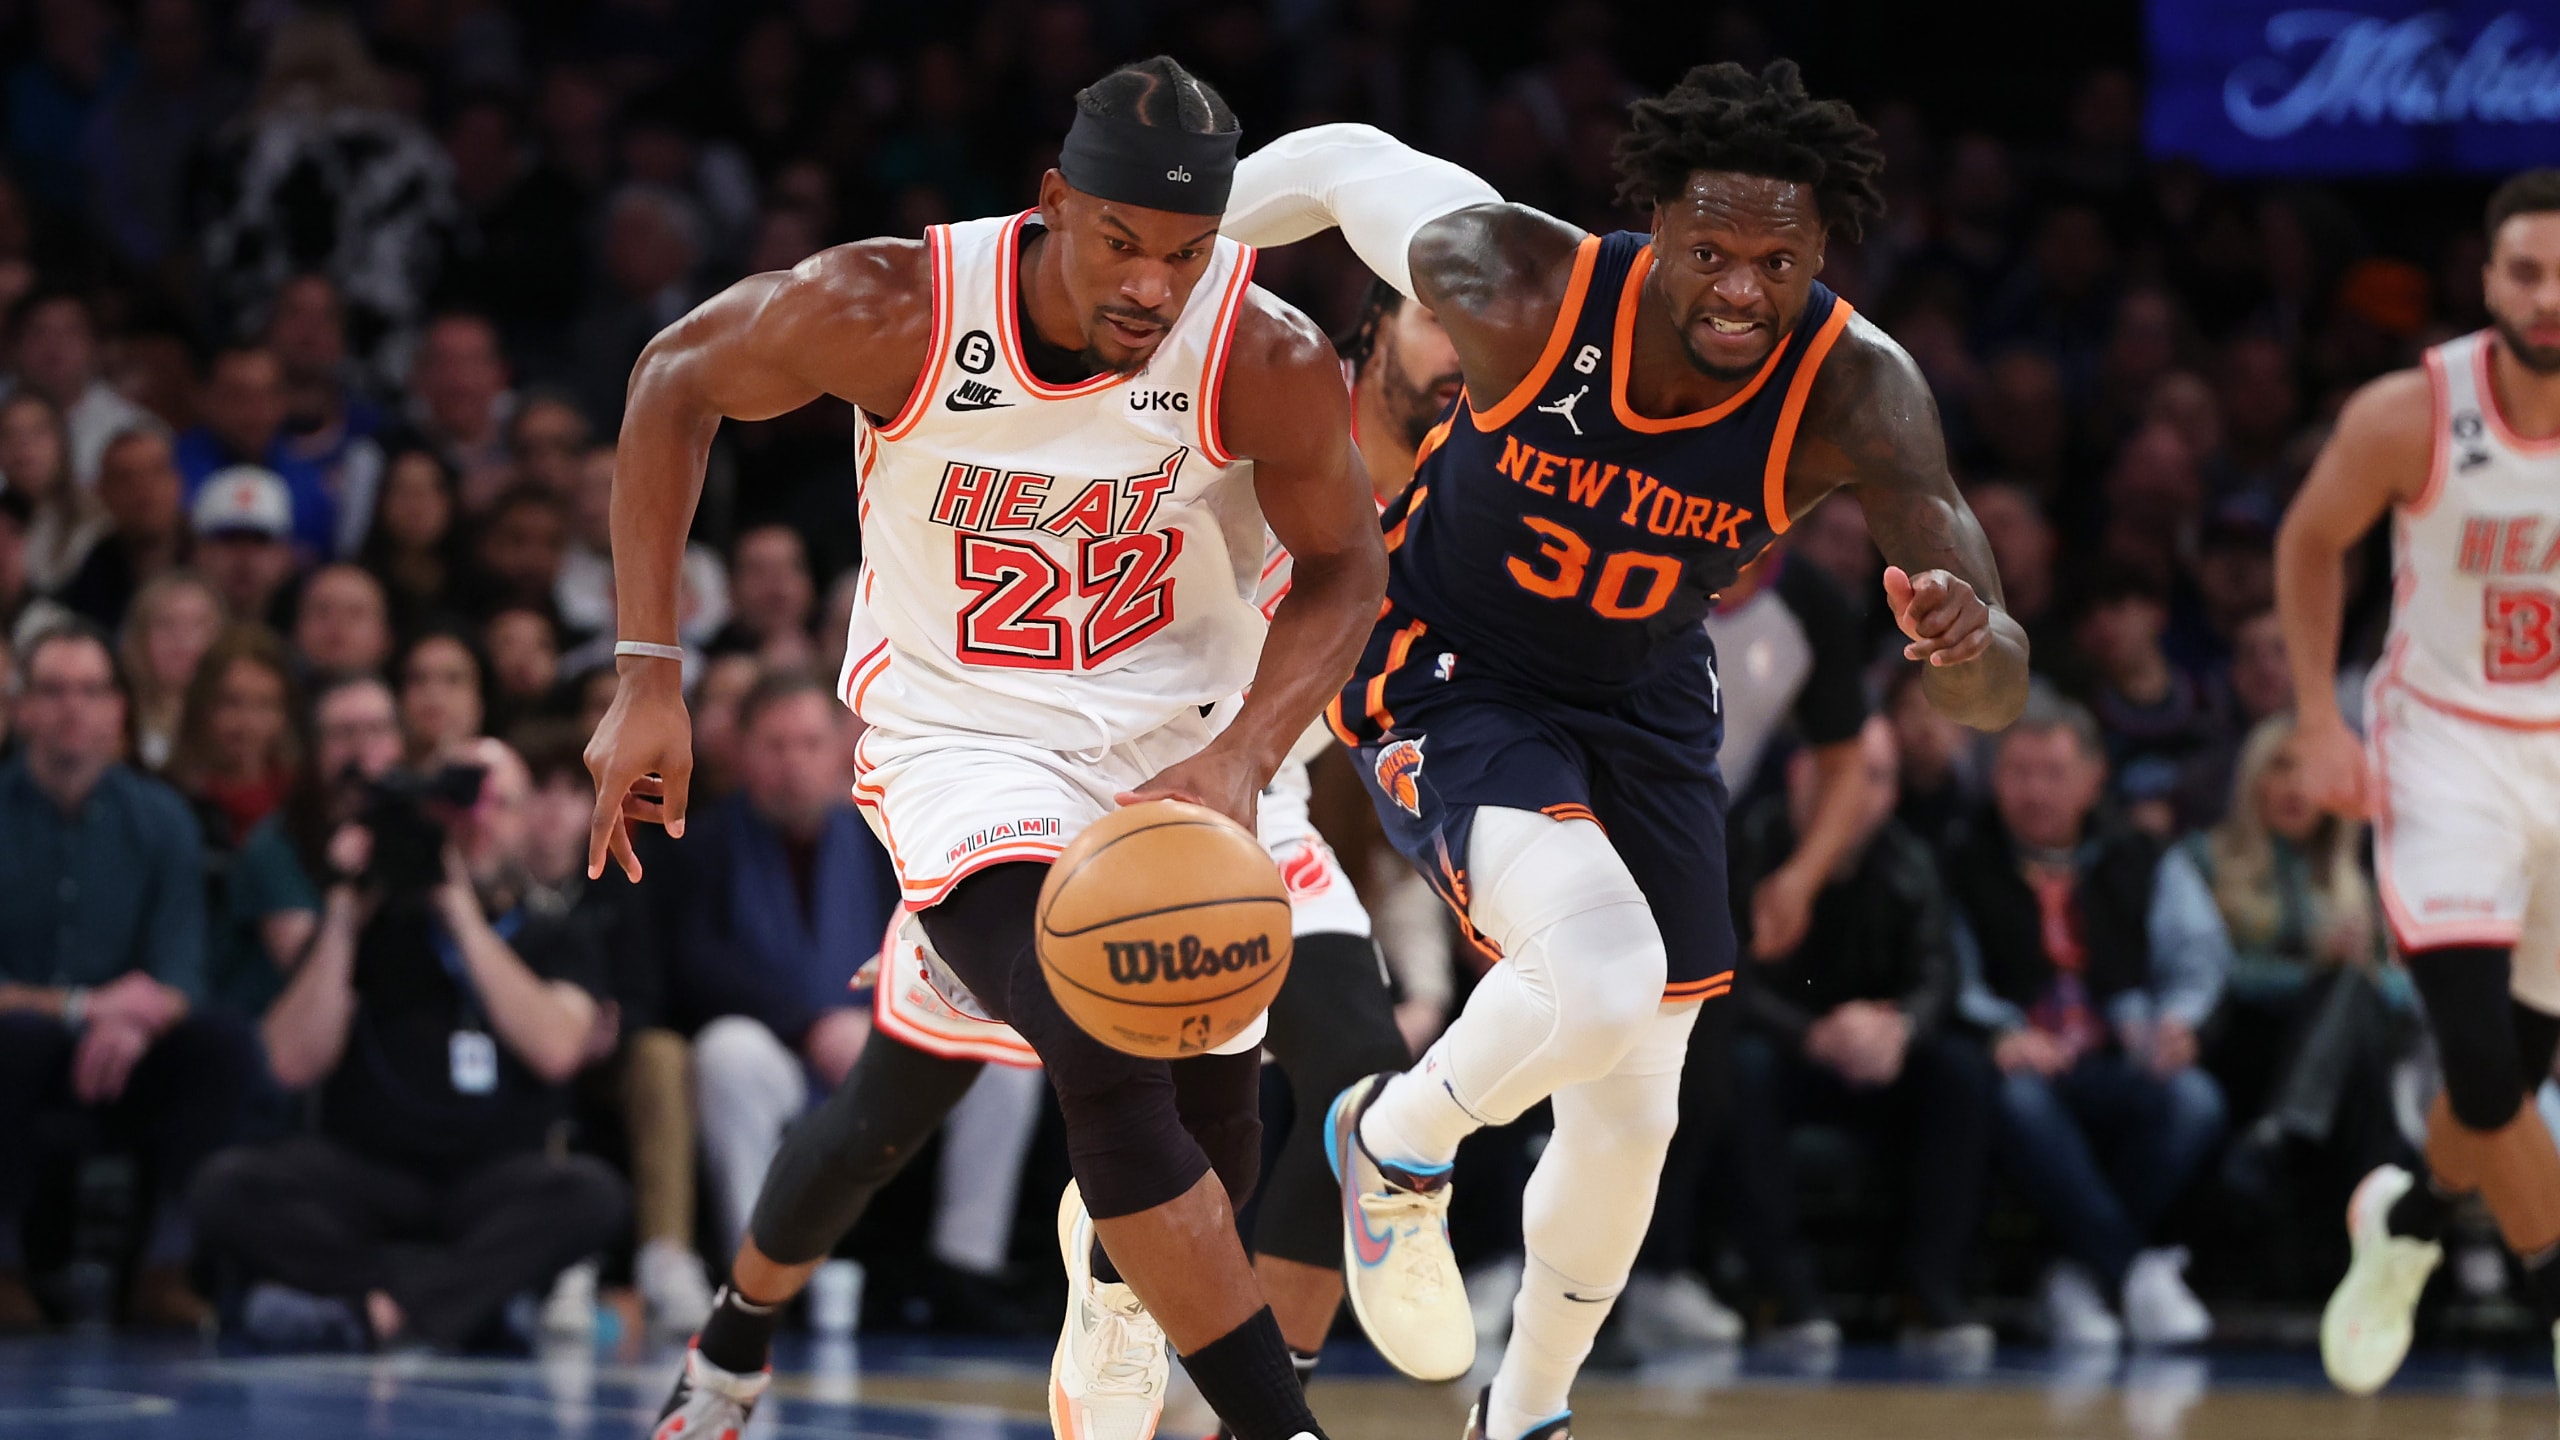 Miami Heat vs New York Knicks Feb 2, 2023 Game Summary | NBA.com